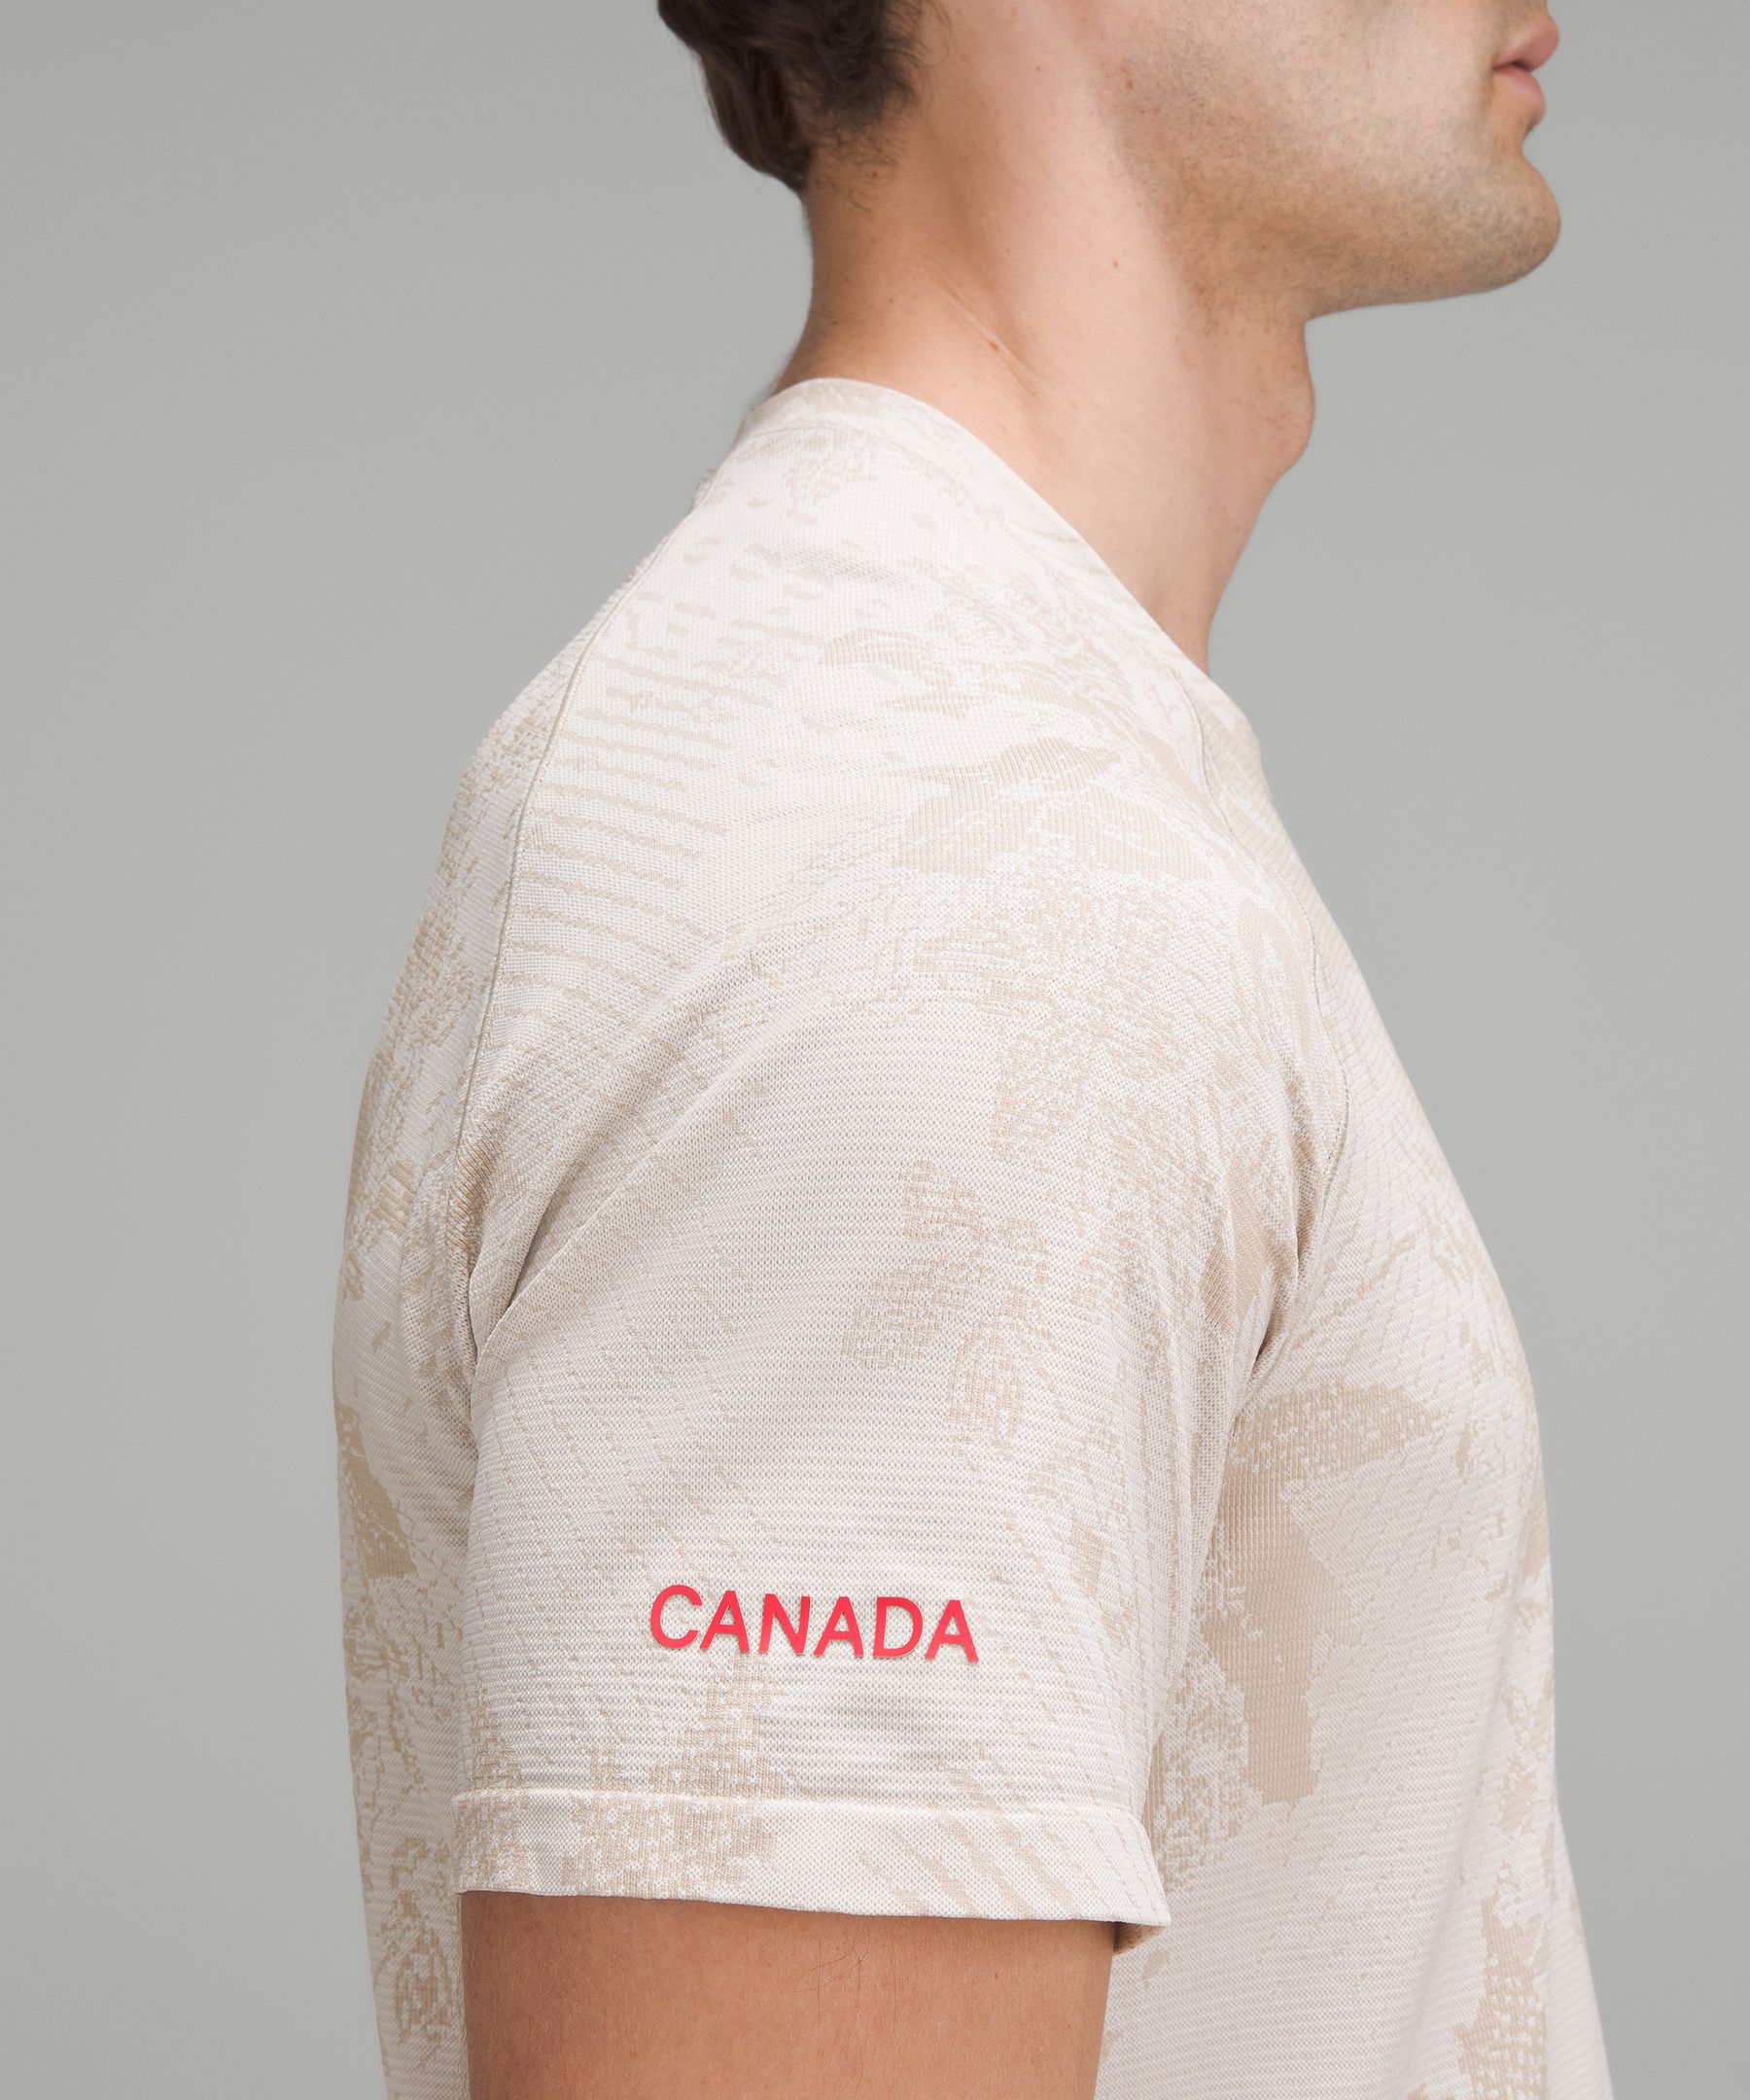 Team Canada Metal Vent Tech Short-Sleeve Shirt *CPC Logo | Men's Short Sleeve Shirts & Tee's